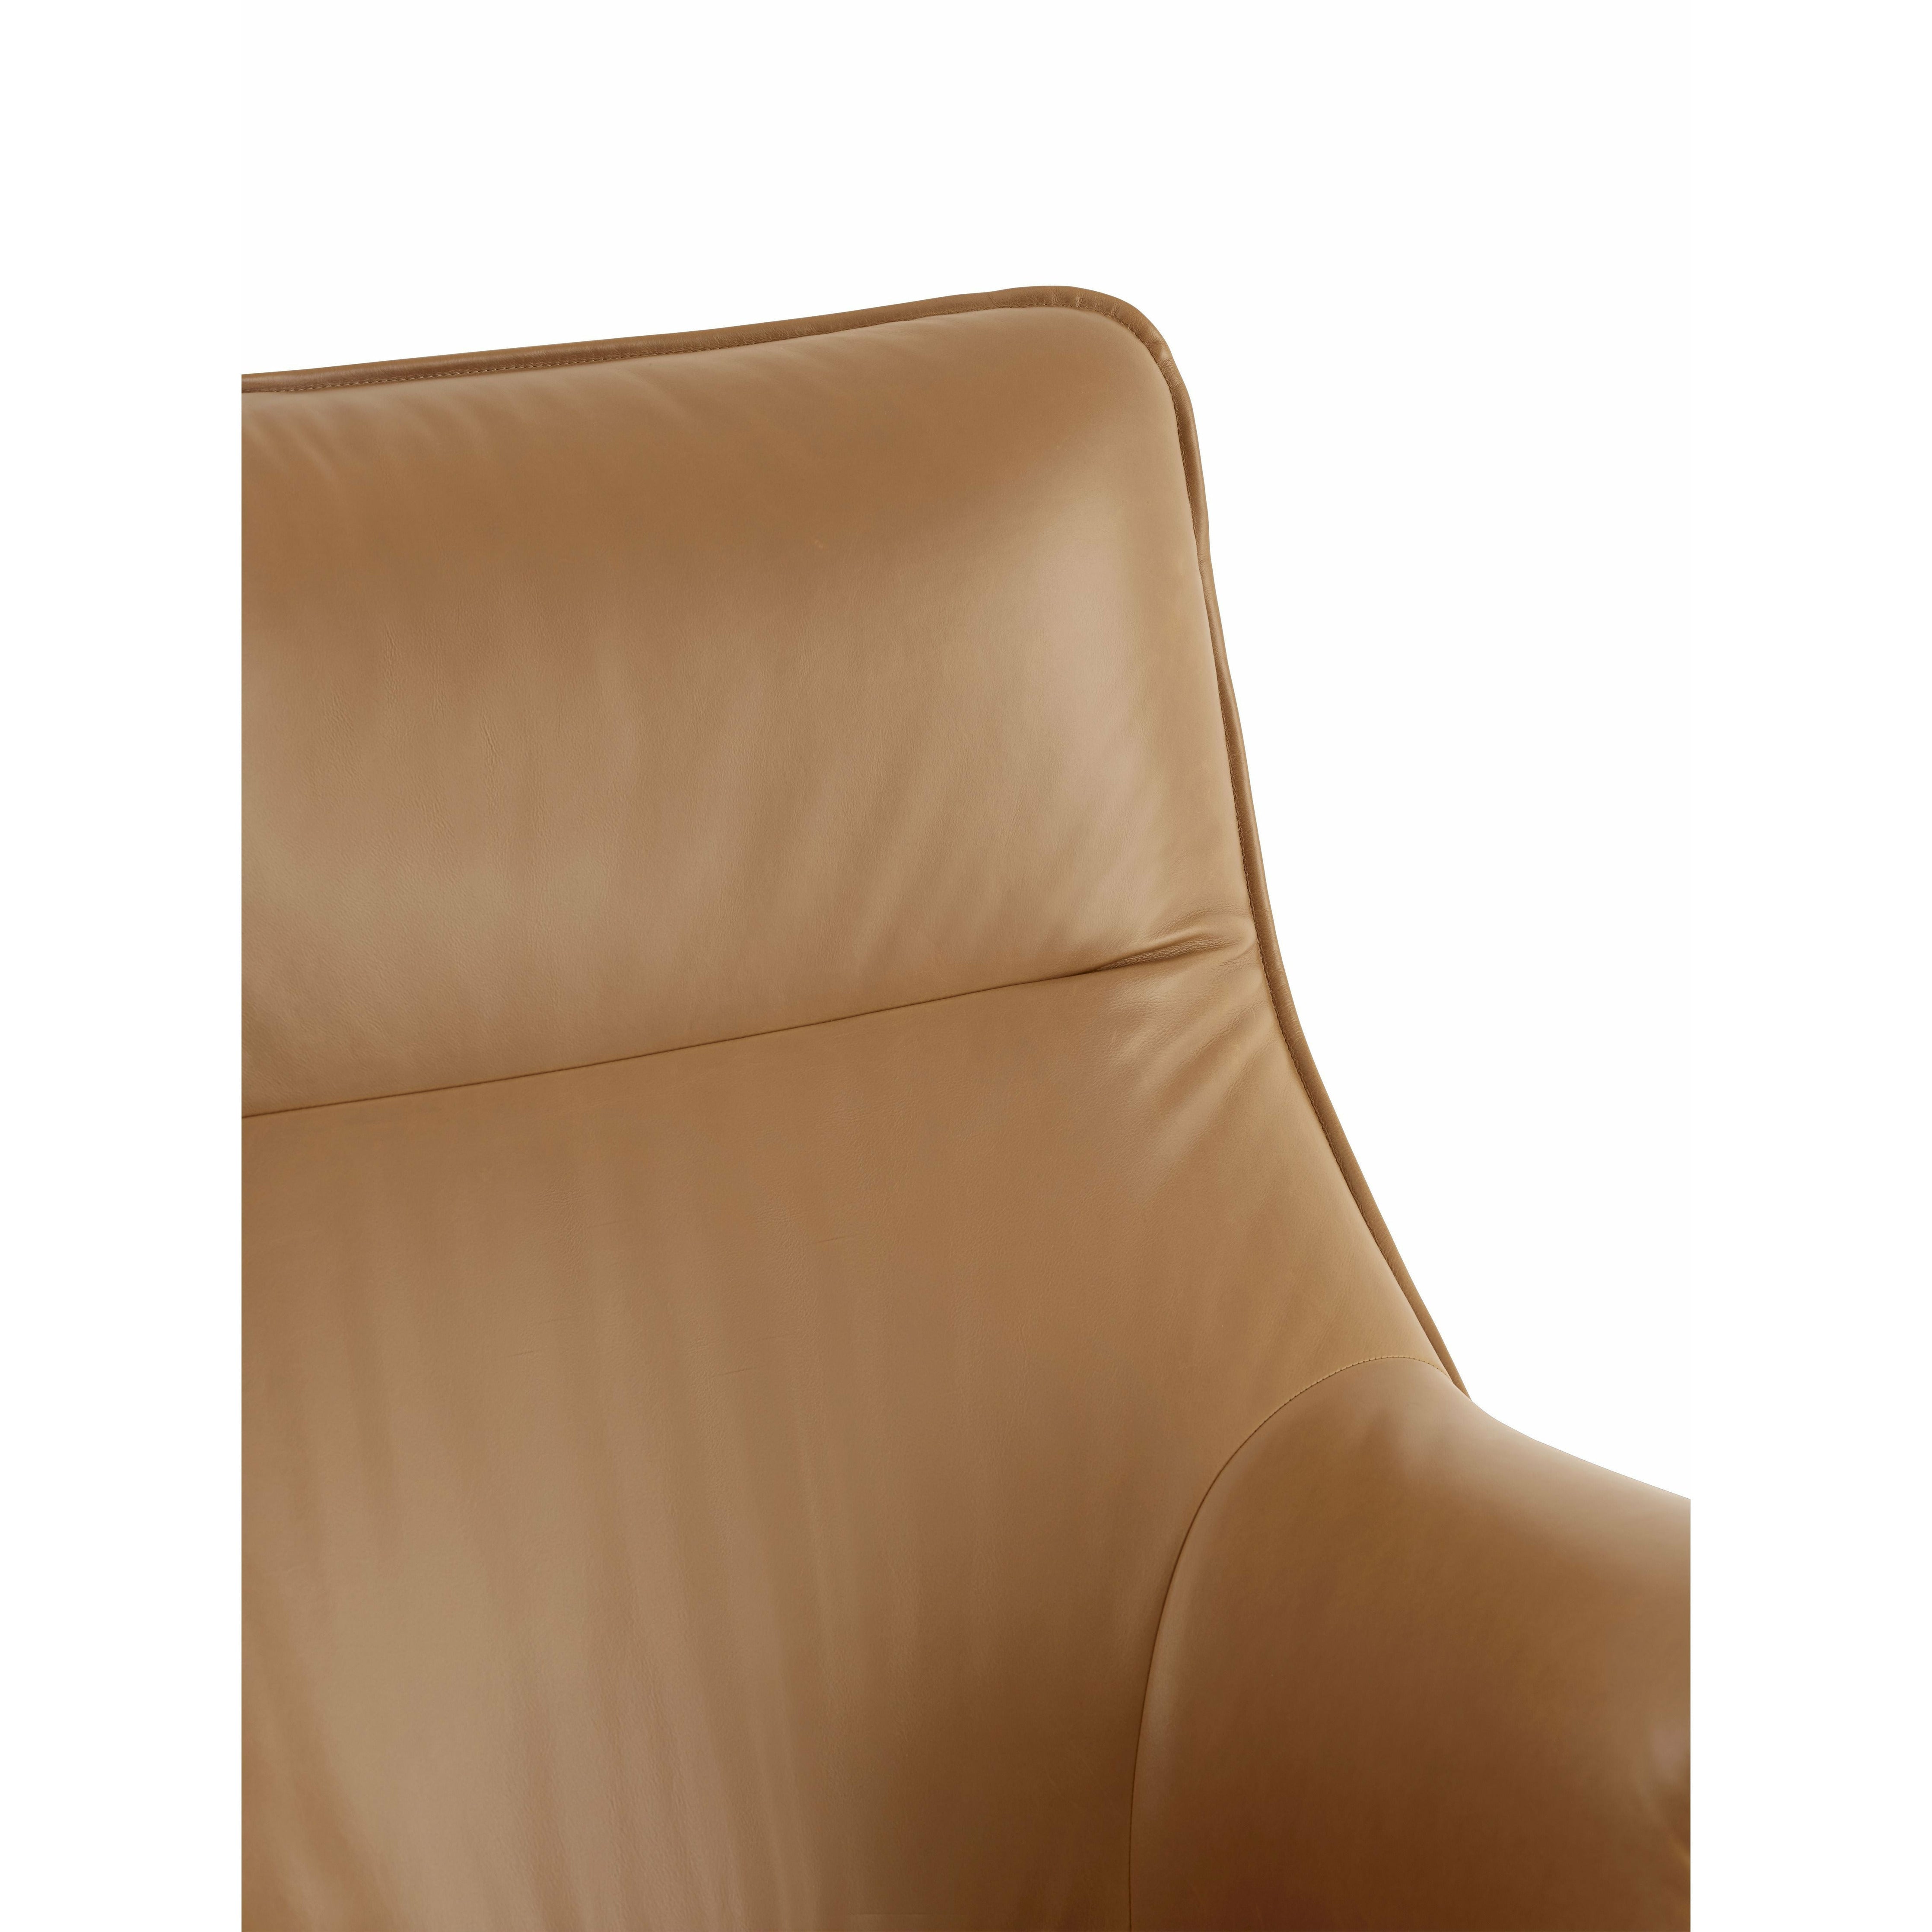 Muuto Doze Lounge Chair Leather, Cognac/Anthracite Black